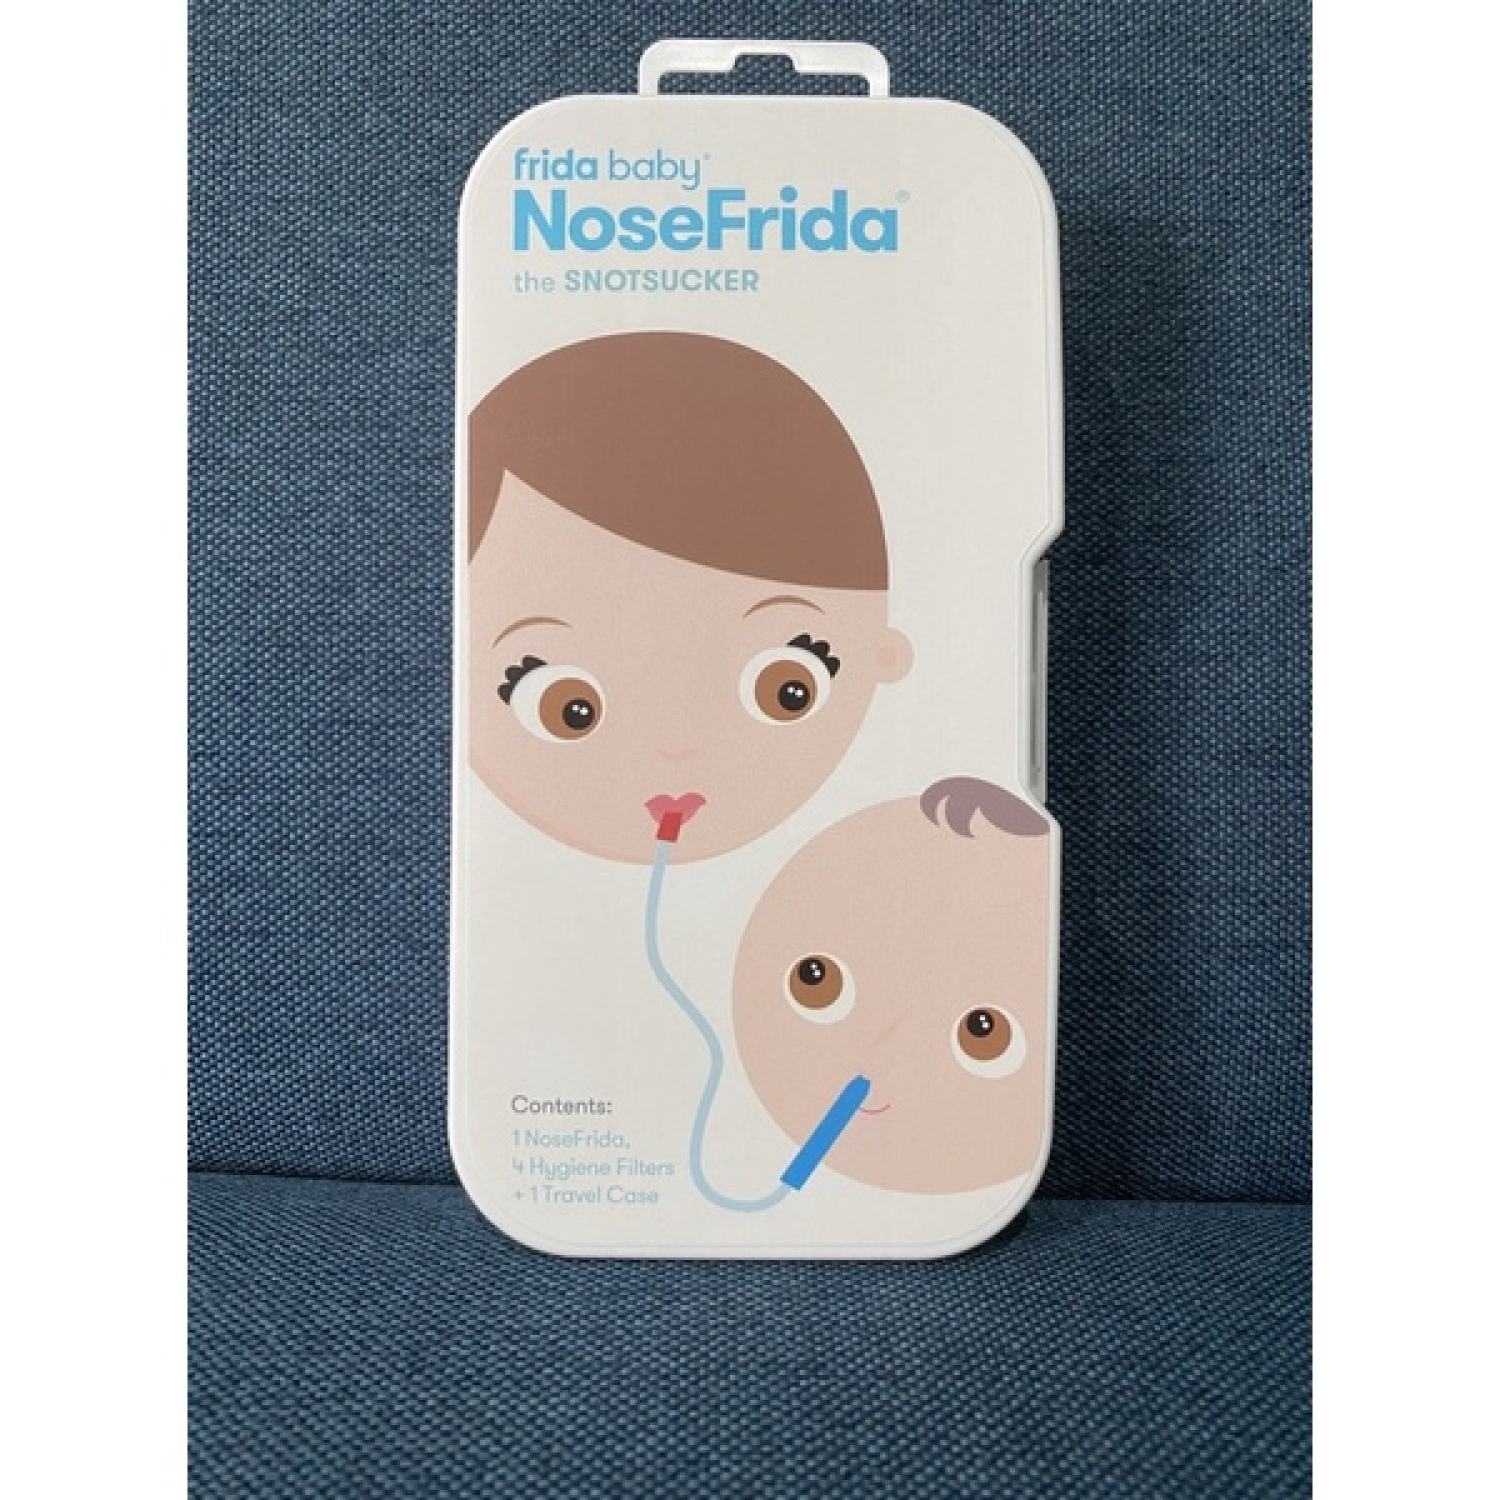 Dụng cụ hút mũi Nosefrida Thuỵ Điển NOSE FRIDA - FRIDABABY cho bé